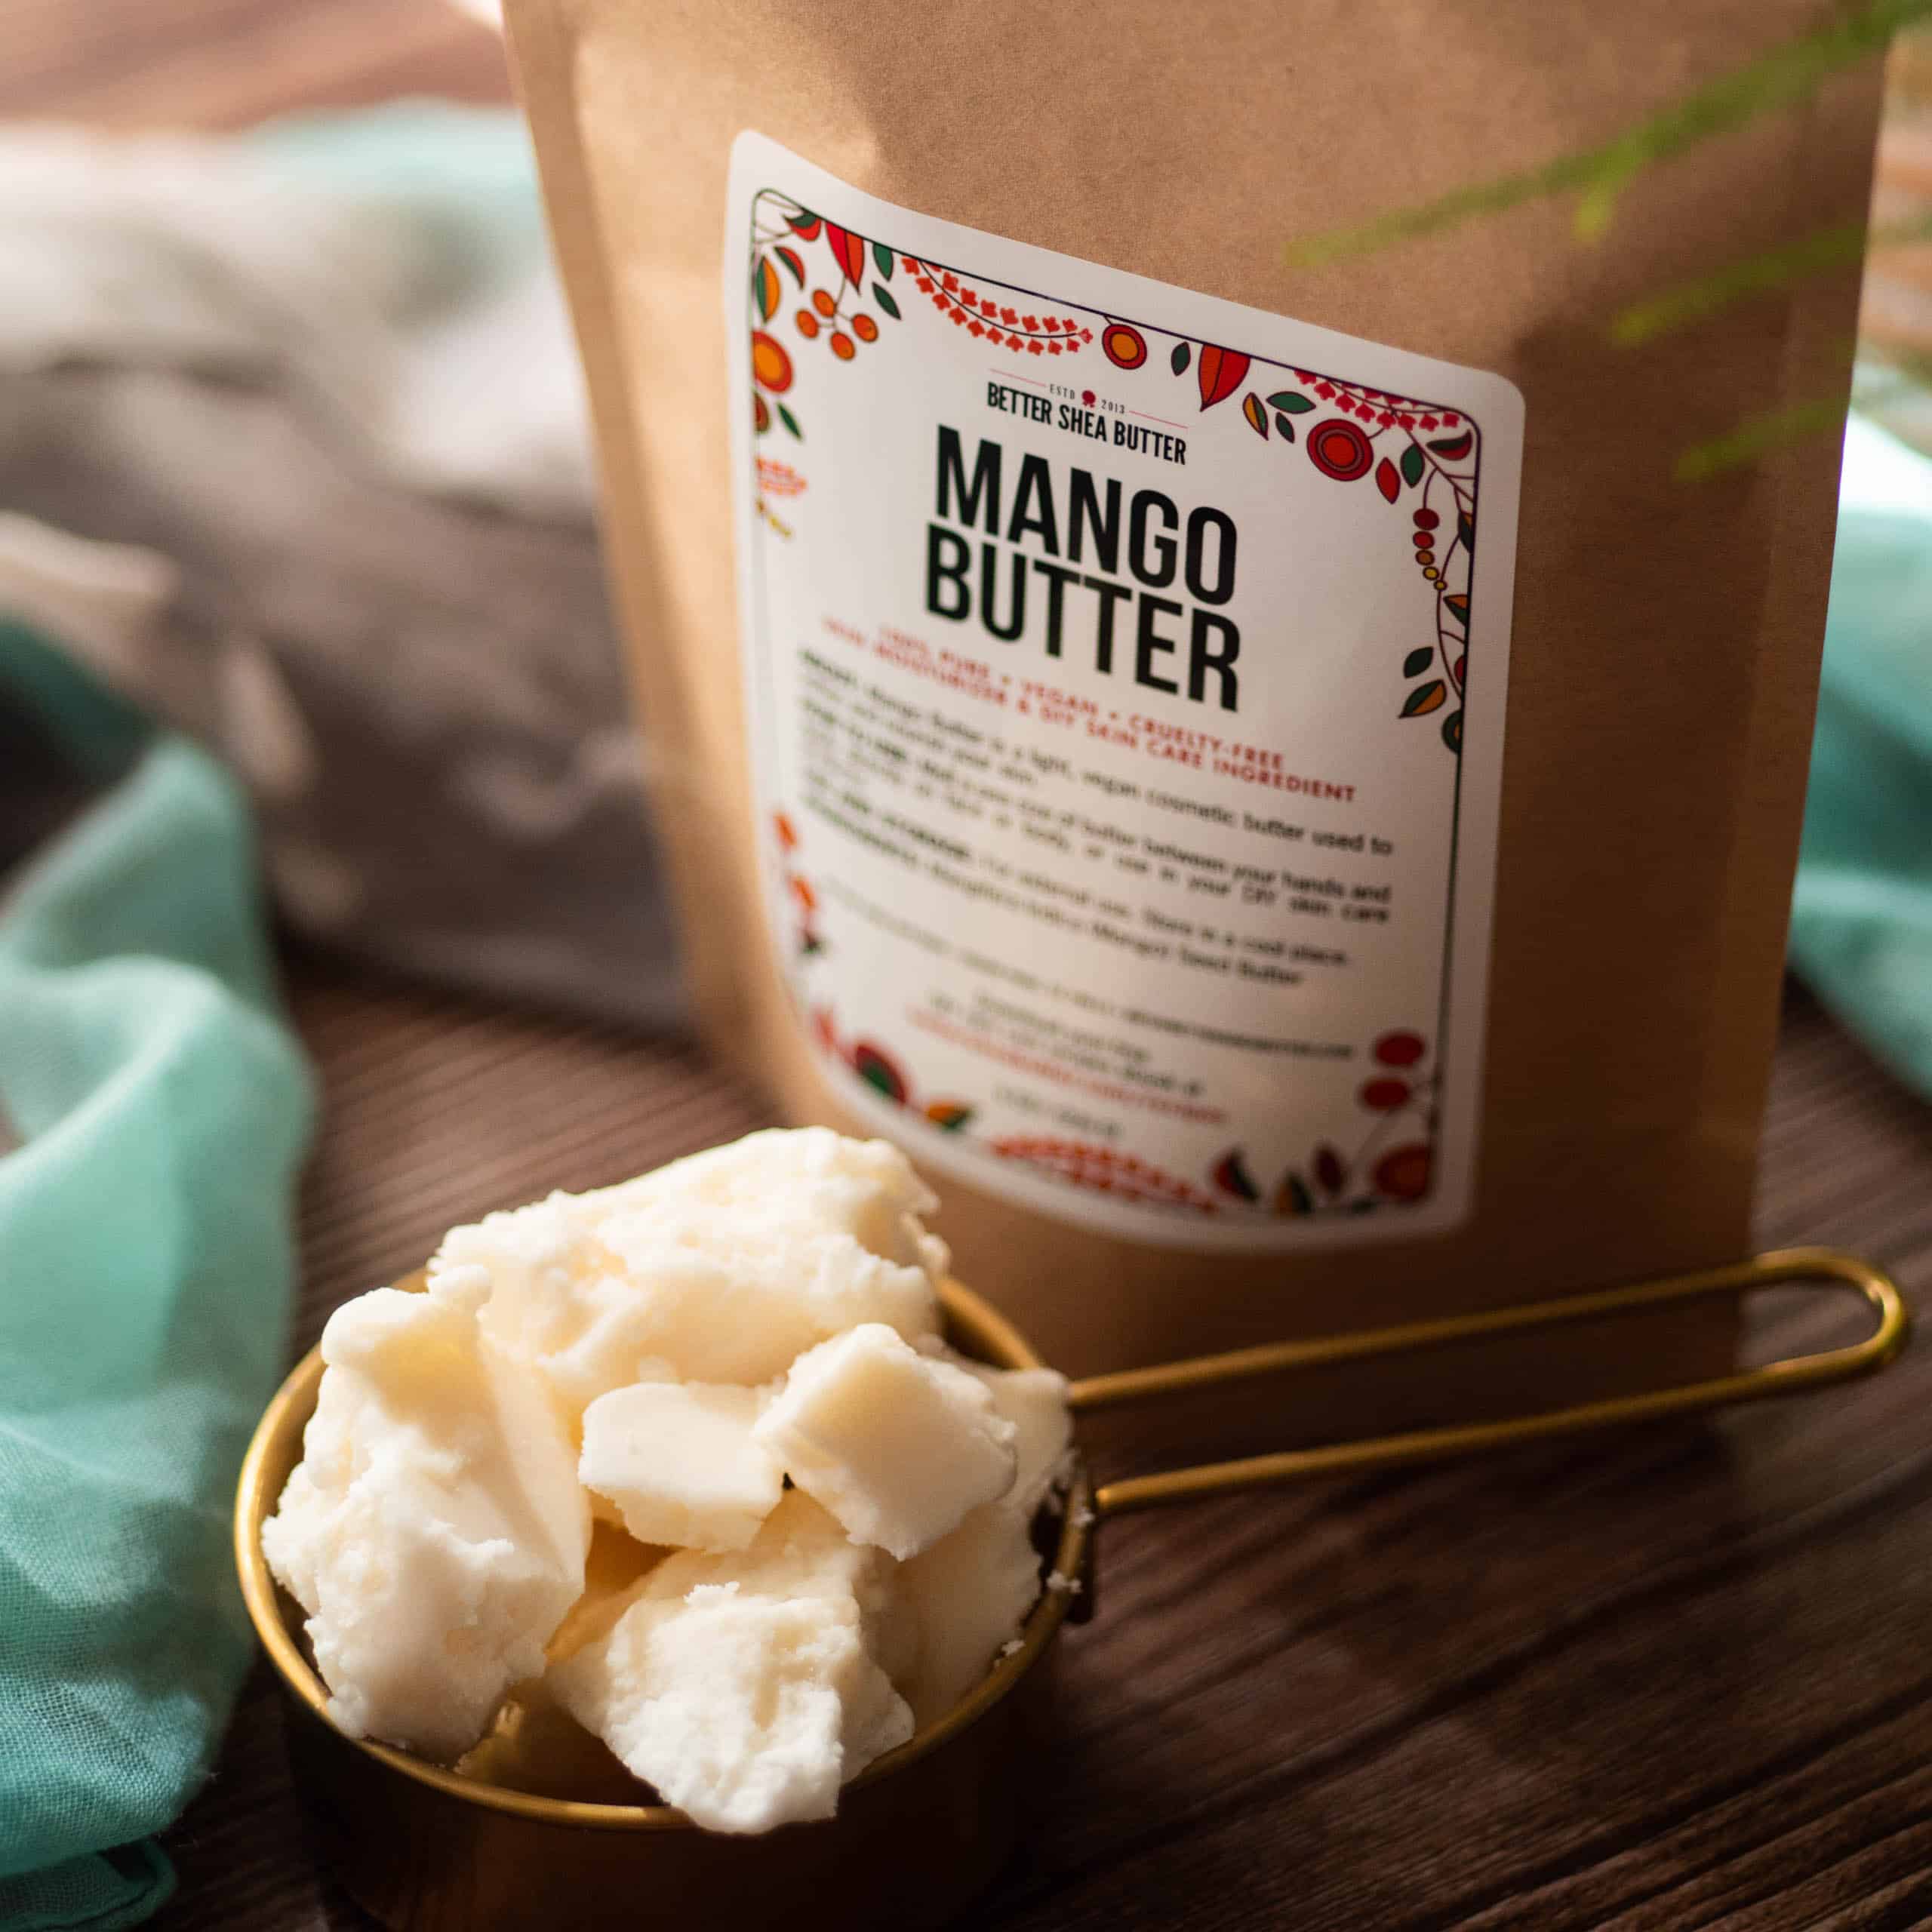 Raw Mango Butter Bulk Wholesale 100% Pure Natural (Bag)